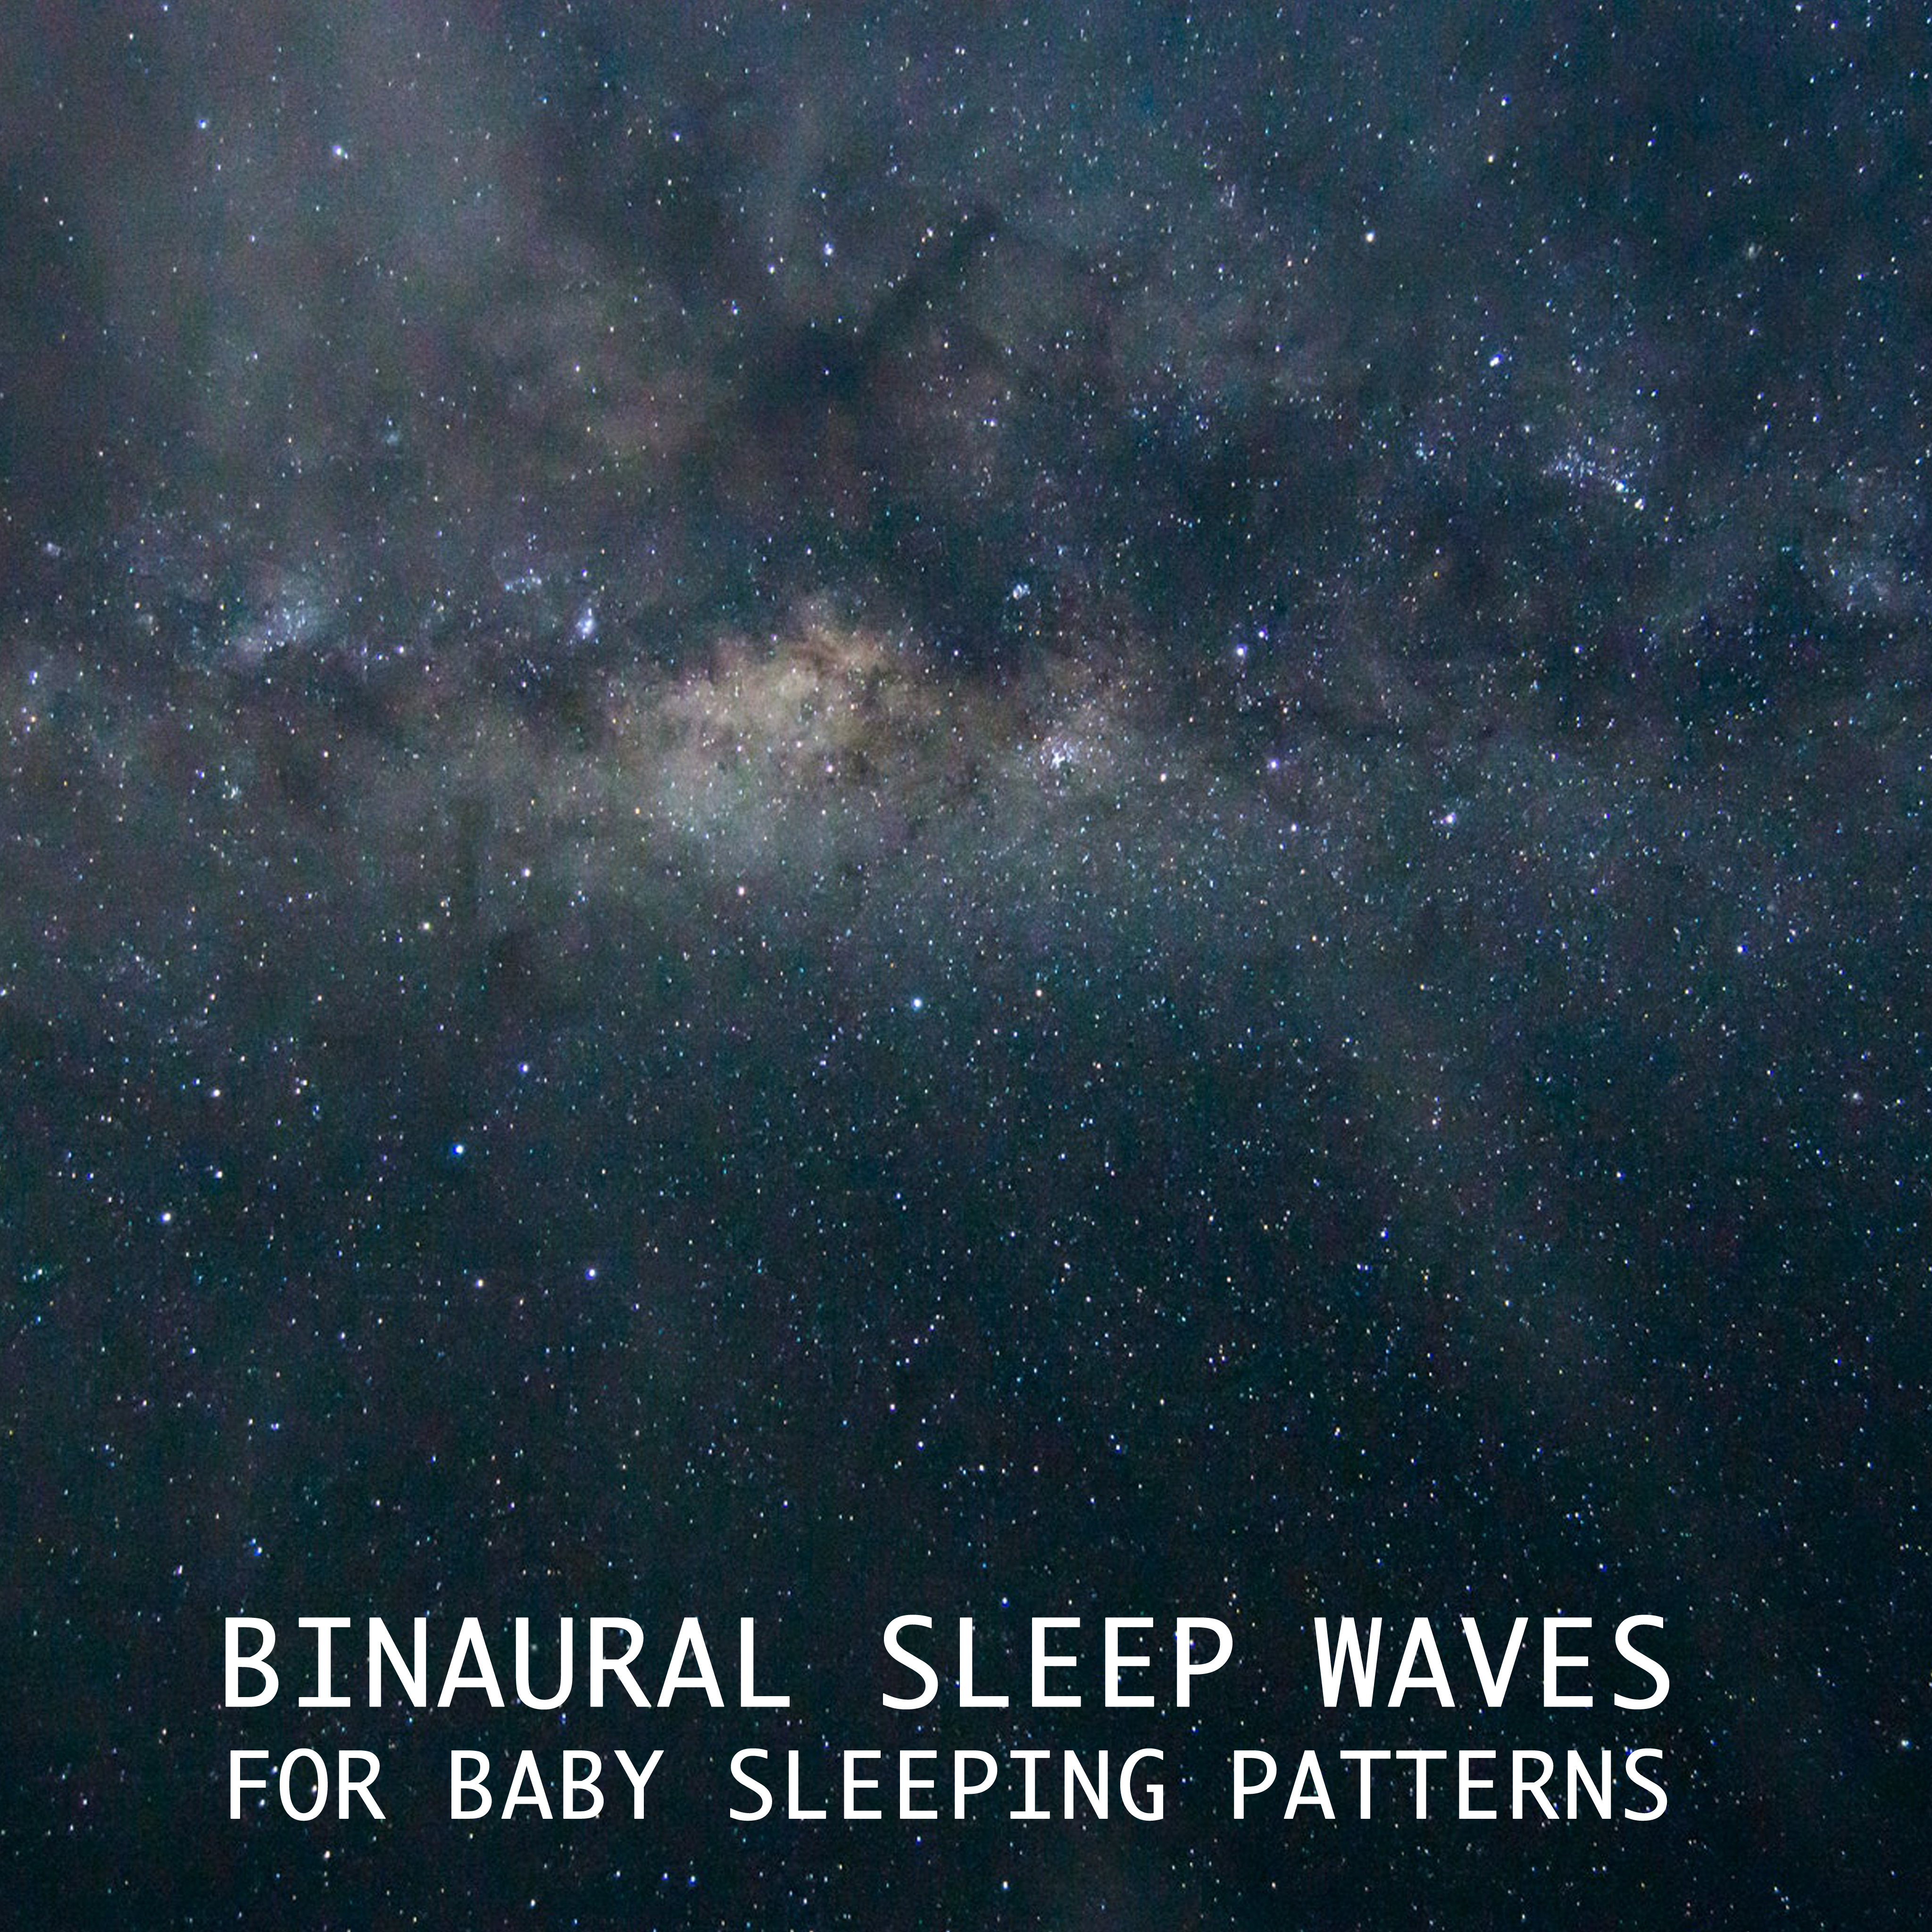 14 Binaural Sleep Waves for Baby Sleeping Patterns